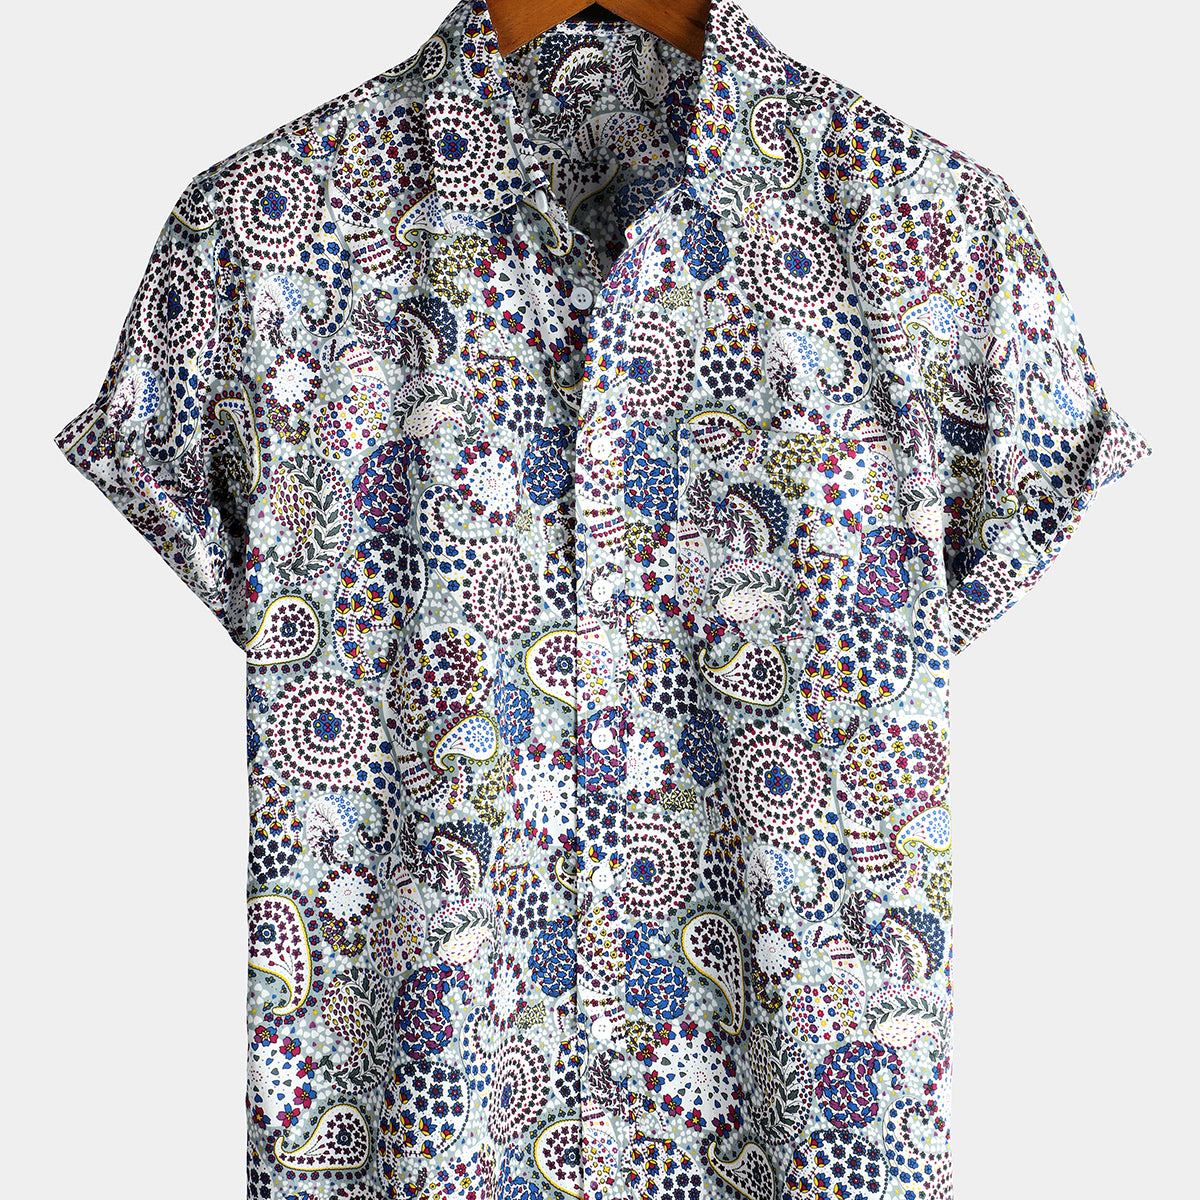 Men's Retro Floral Holiday Cotton Short Sleeve Shirt